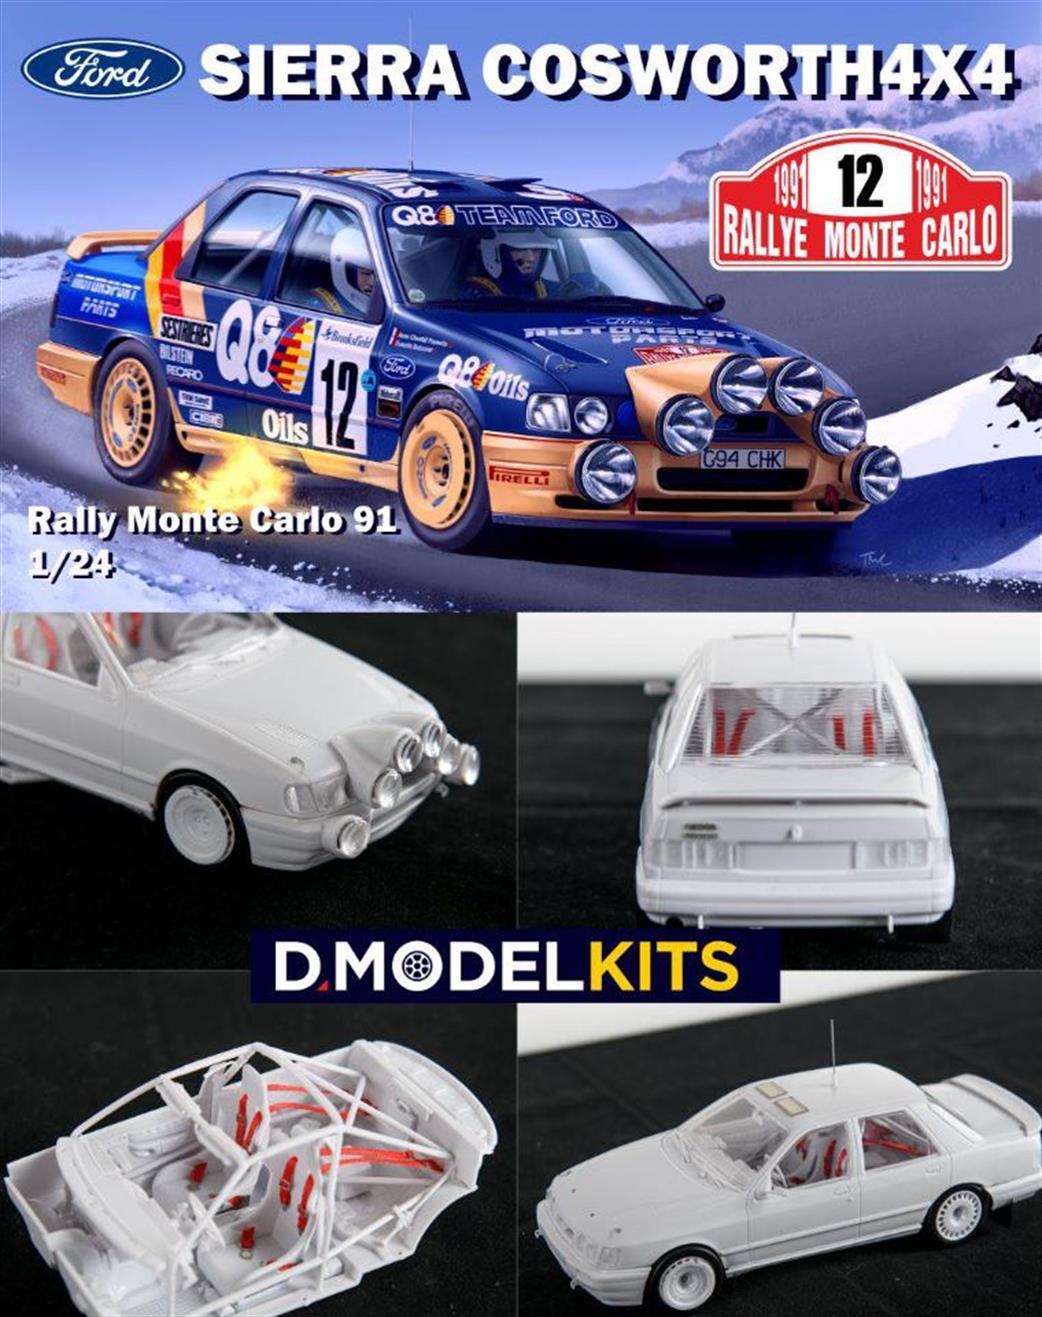 DM Model Kits 1/24 DM-K001 Ford Sierra Cosworth 4x4 Rally Monte Carlo 1991 Kit